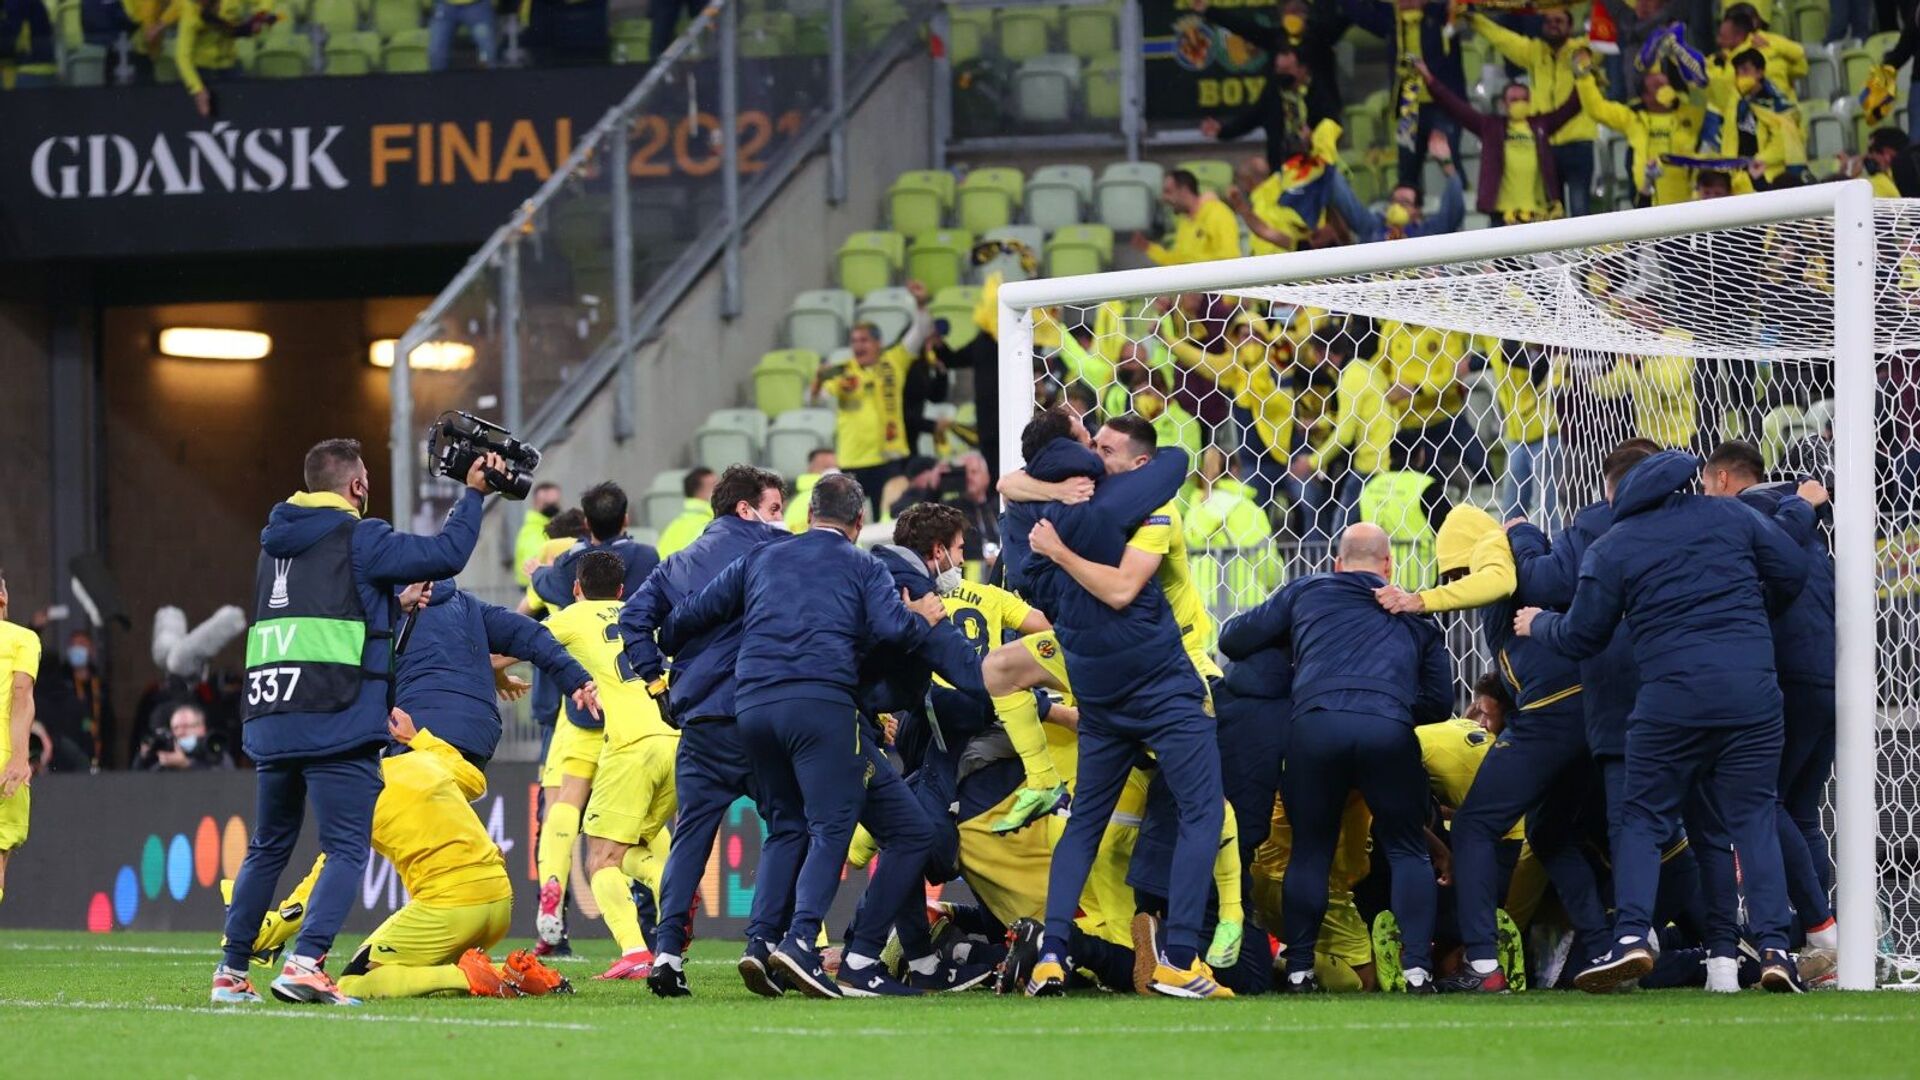 باشگاه ویارئال اسپانیا    The Spanish football club Villarreal has won the UEFA Europa League, beating  England's Manchester United in the penalty shootout. - اسپوتنیک افغانستان  , 1920, 05.08.2021